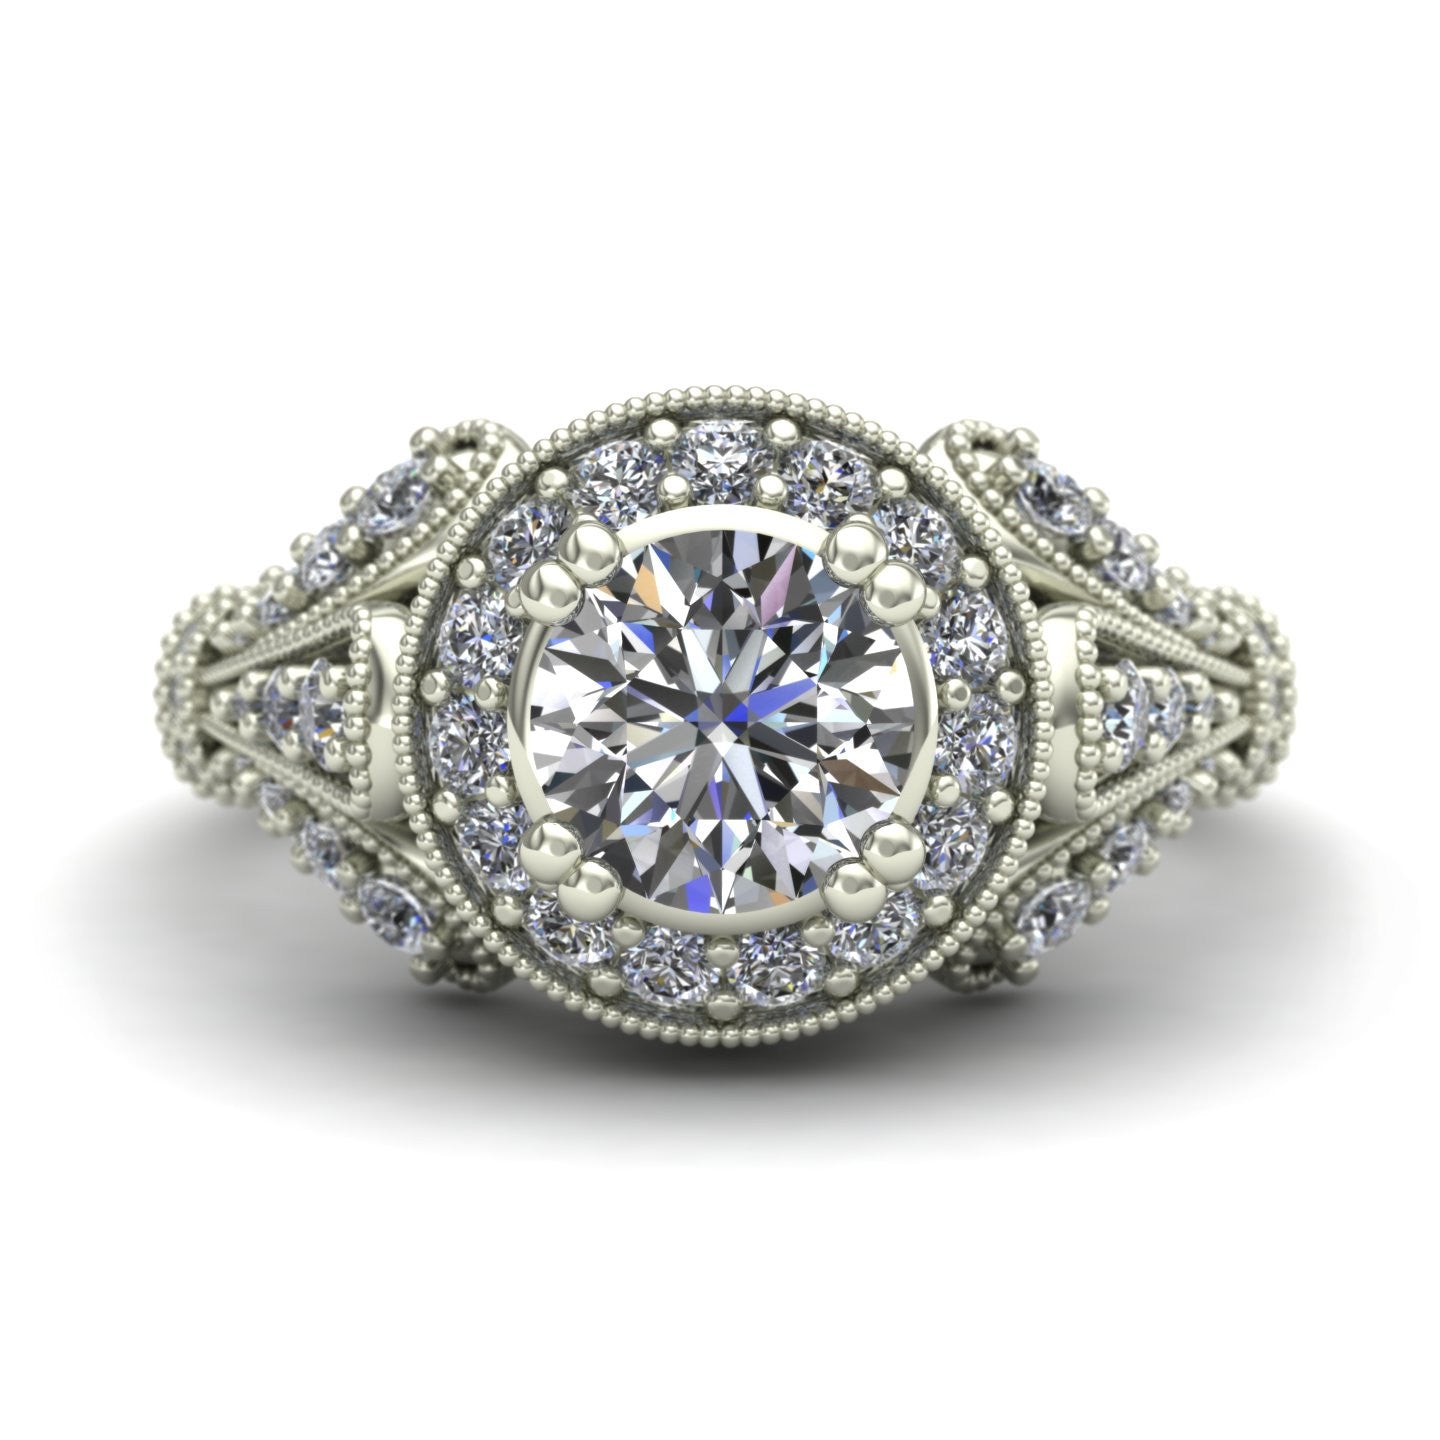 1ct Diamond halo fleur de lis engagement ring in 18k white gold - Charles Babb Designs - top view